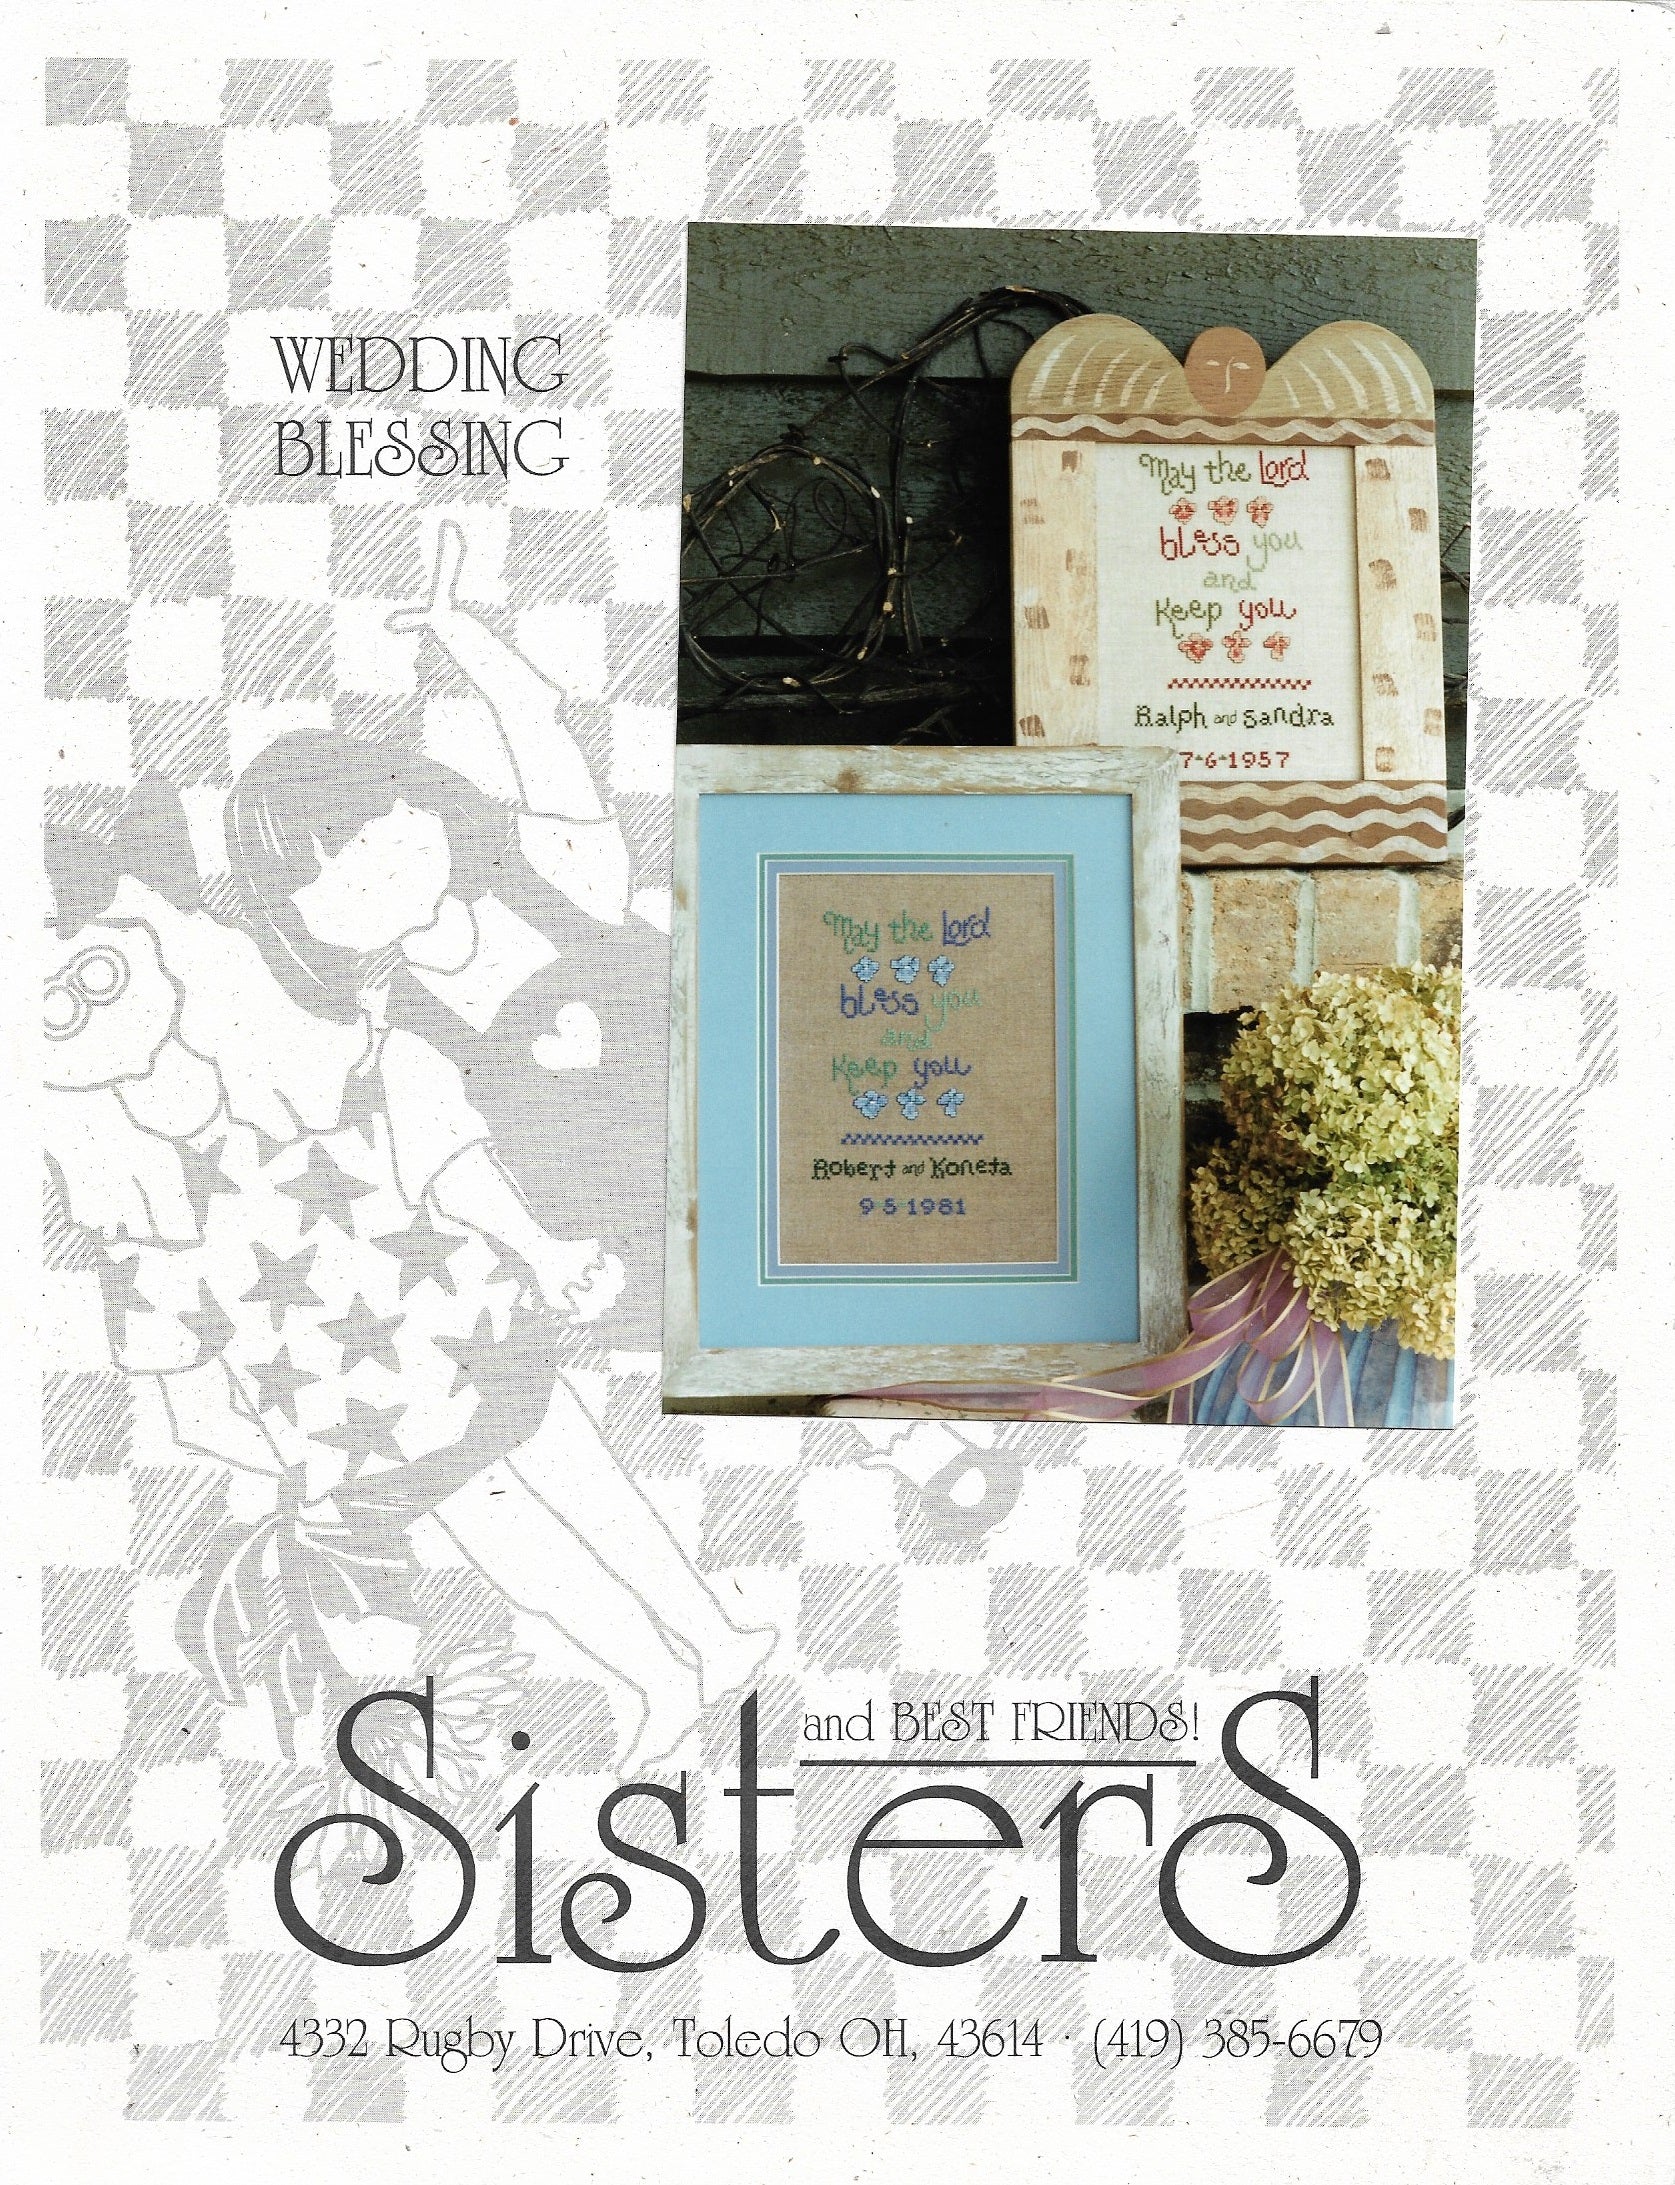 Sisters & Best friends Wedding Blessing cross stitch pattern